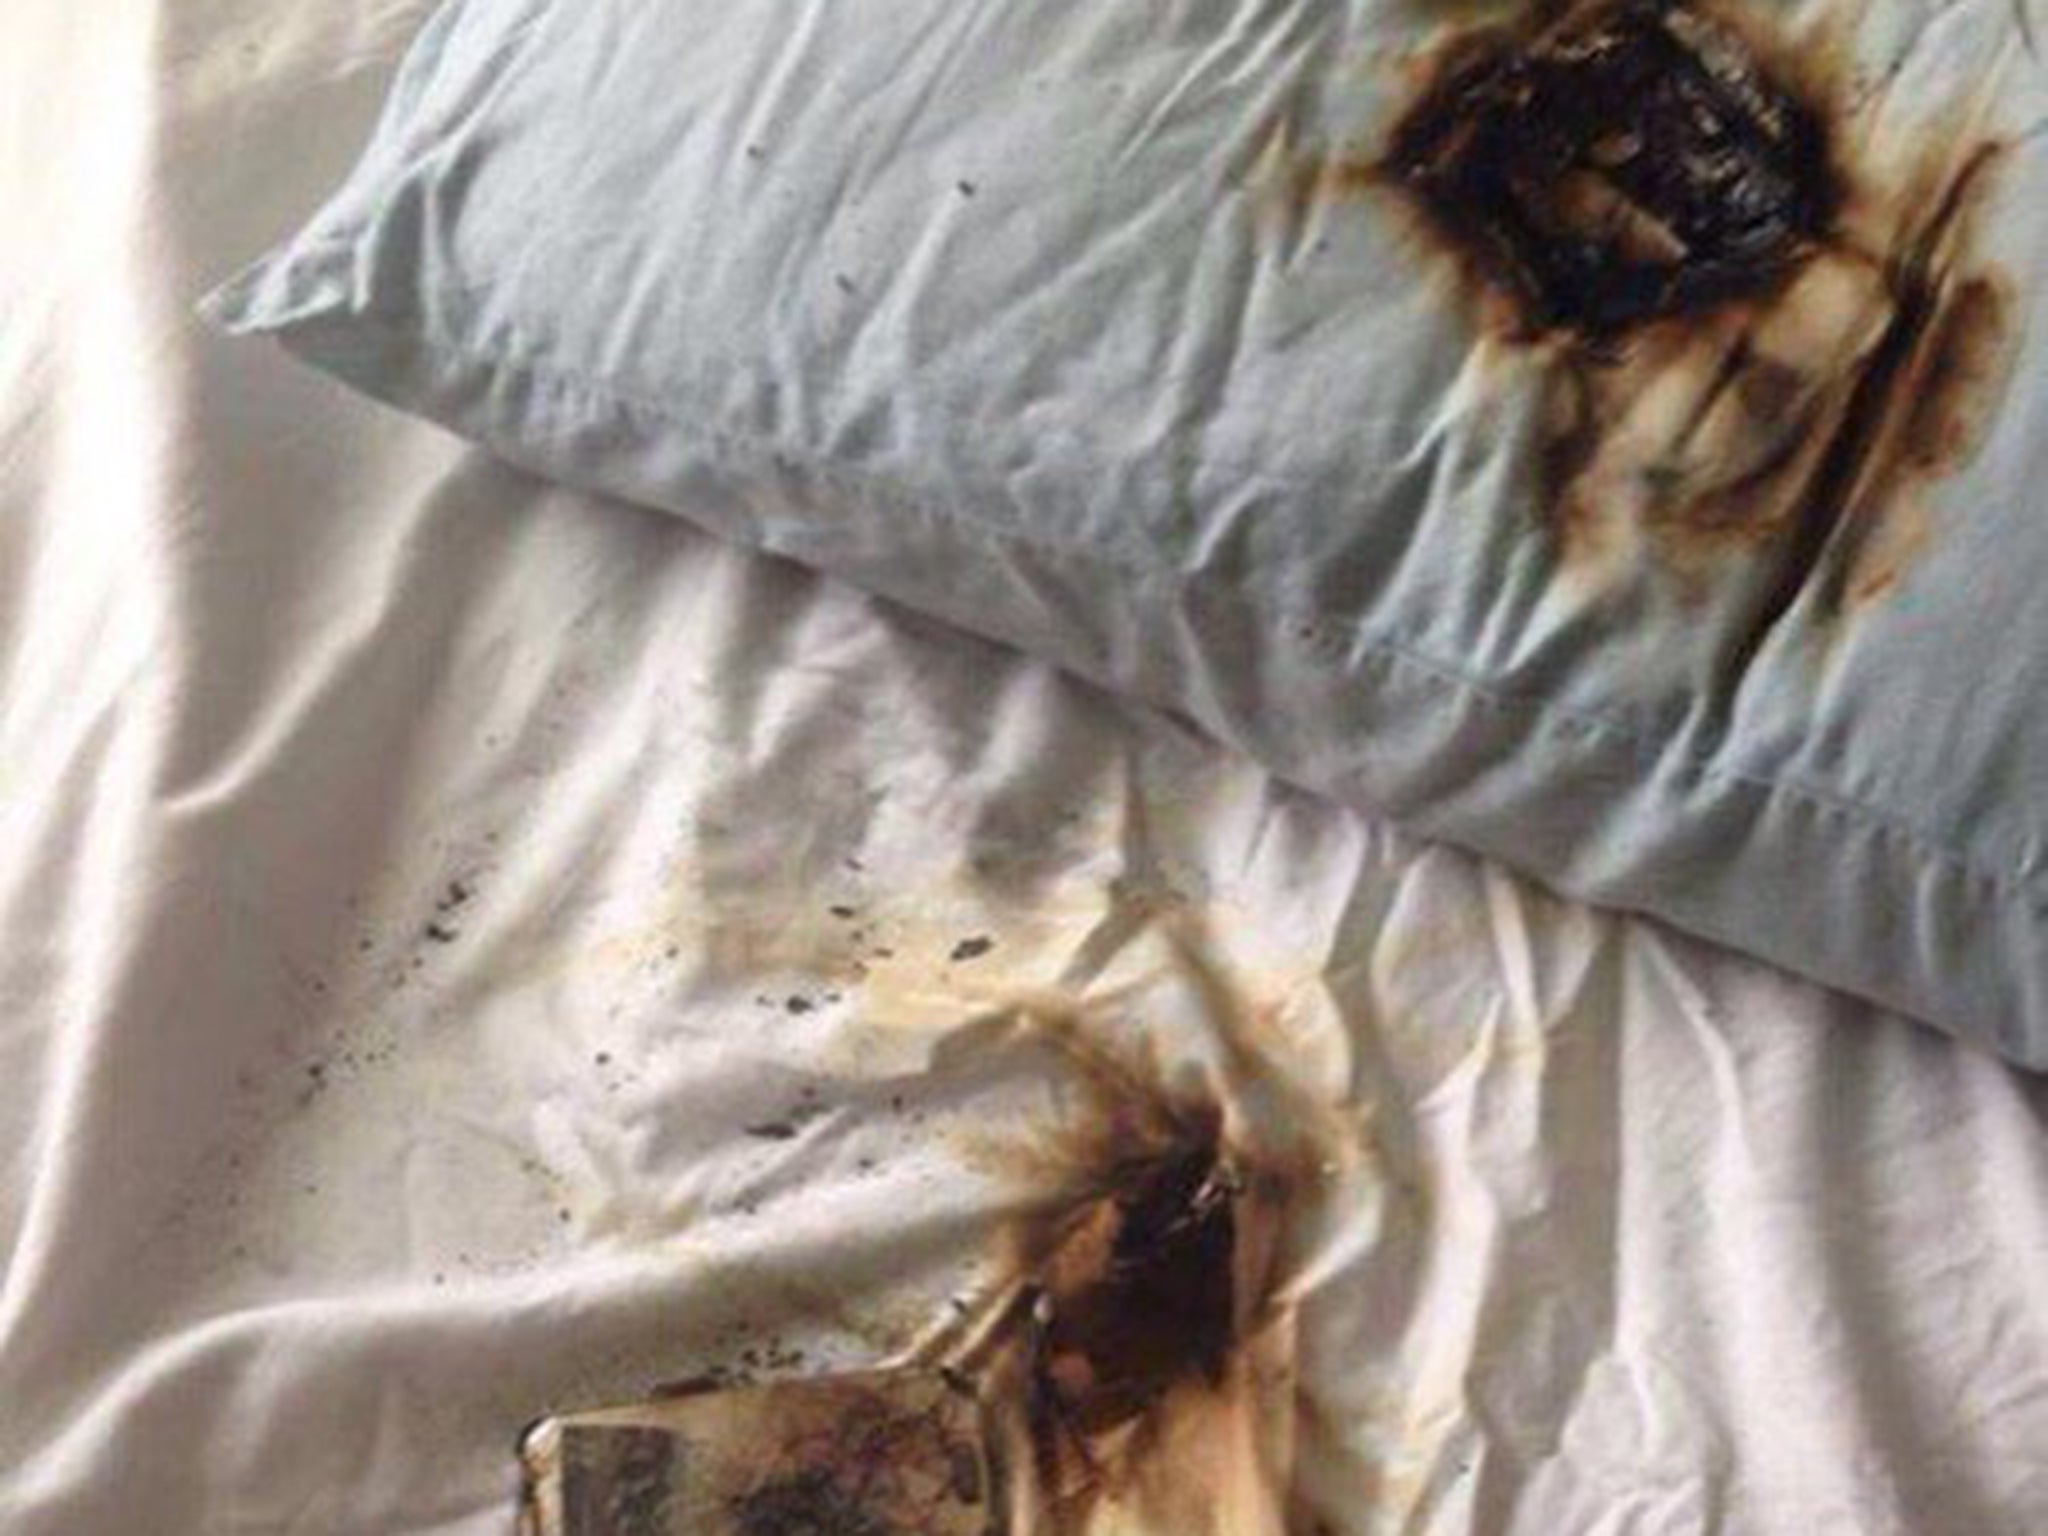 Photos show burned pillow and mattress